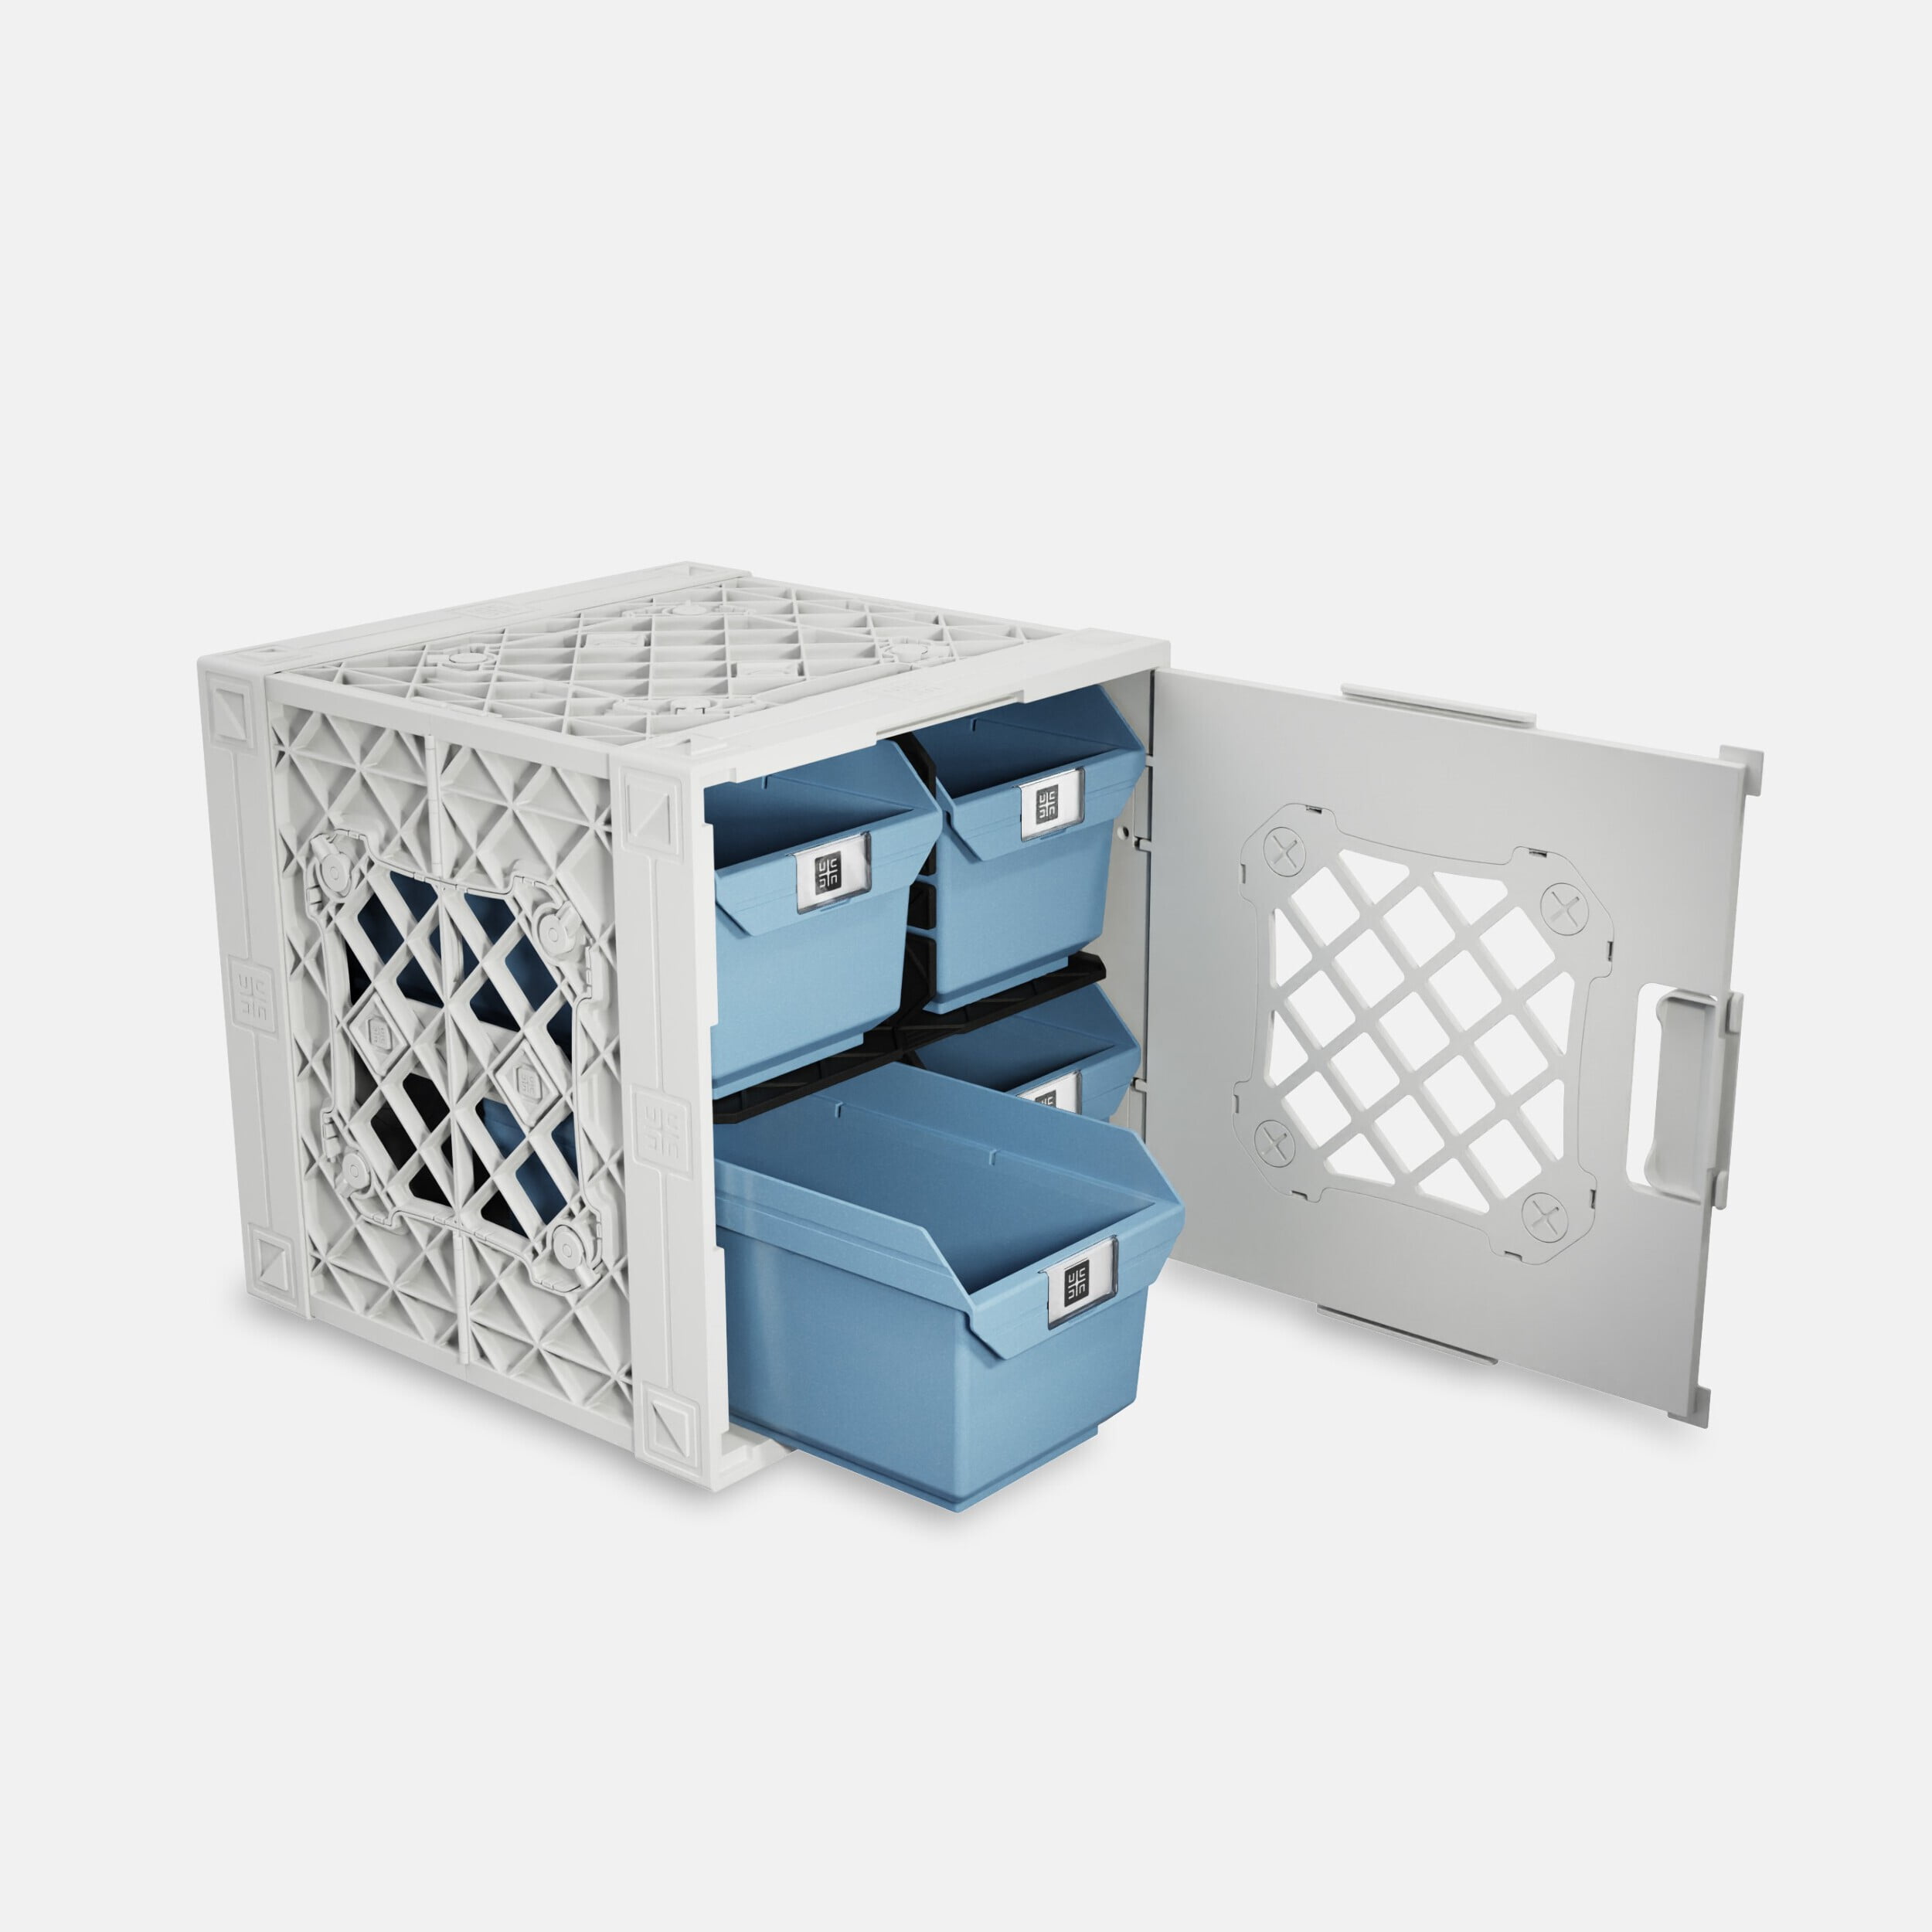 Really Useful Box Snap-Lid Storage Bin, 16.9 gal, 17.31 x 28 x 12.25, Clear/Blue